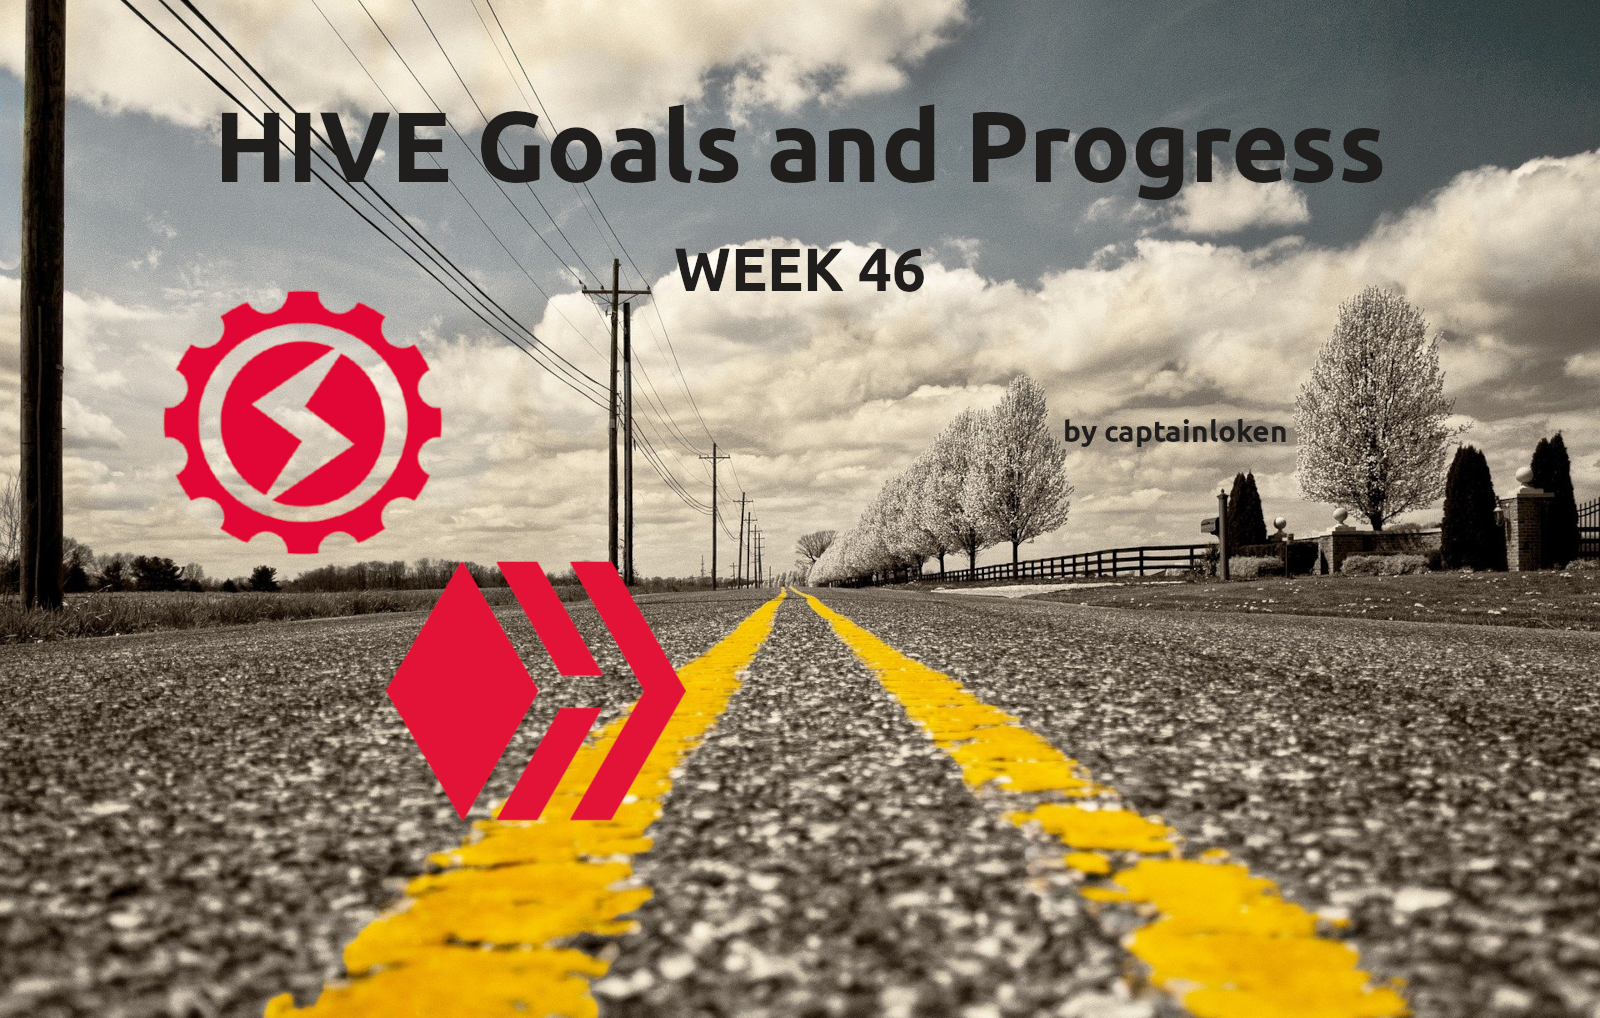 @captainloken/hive-goals-and-progress-week-46-mission-accomplished